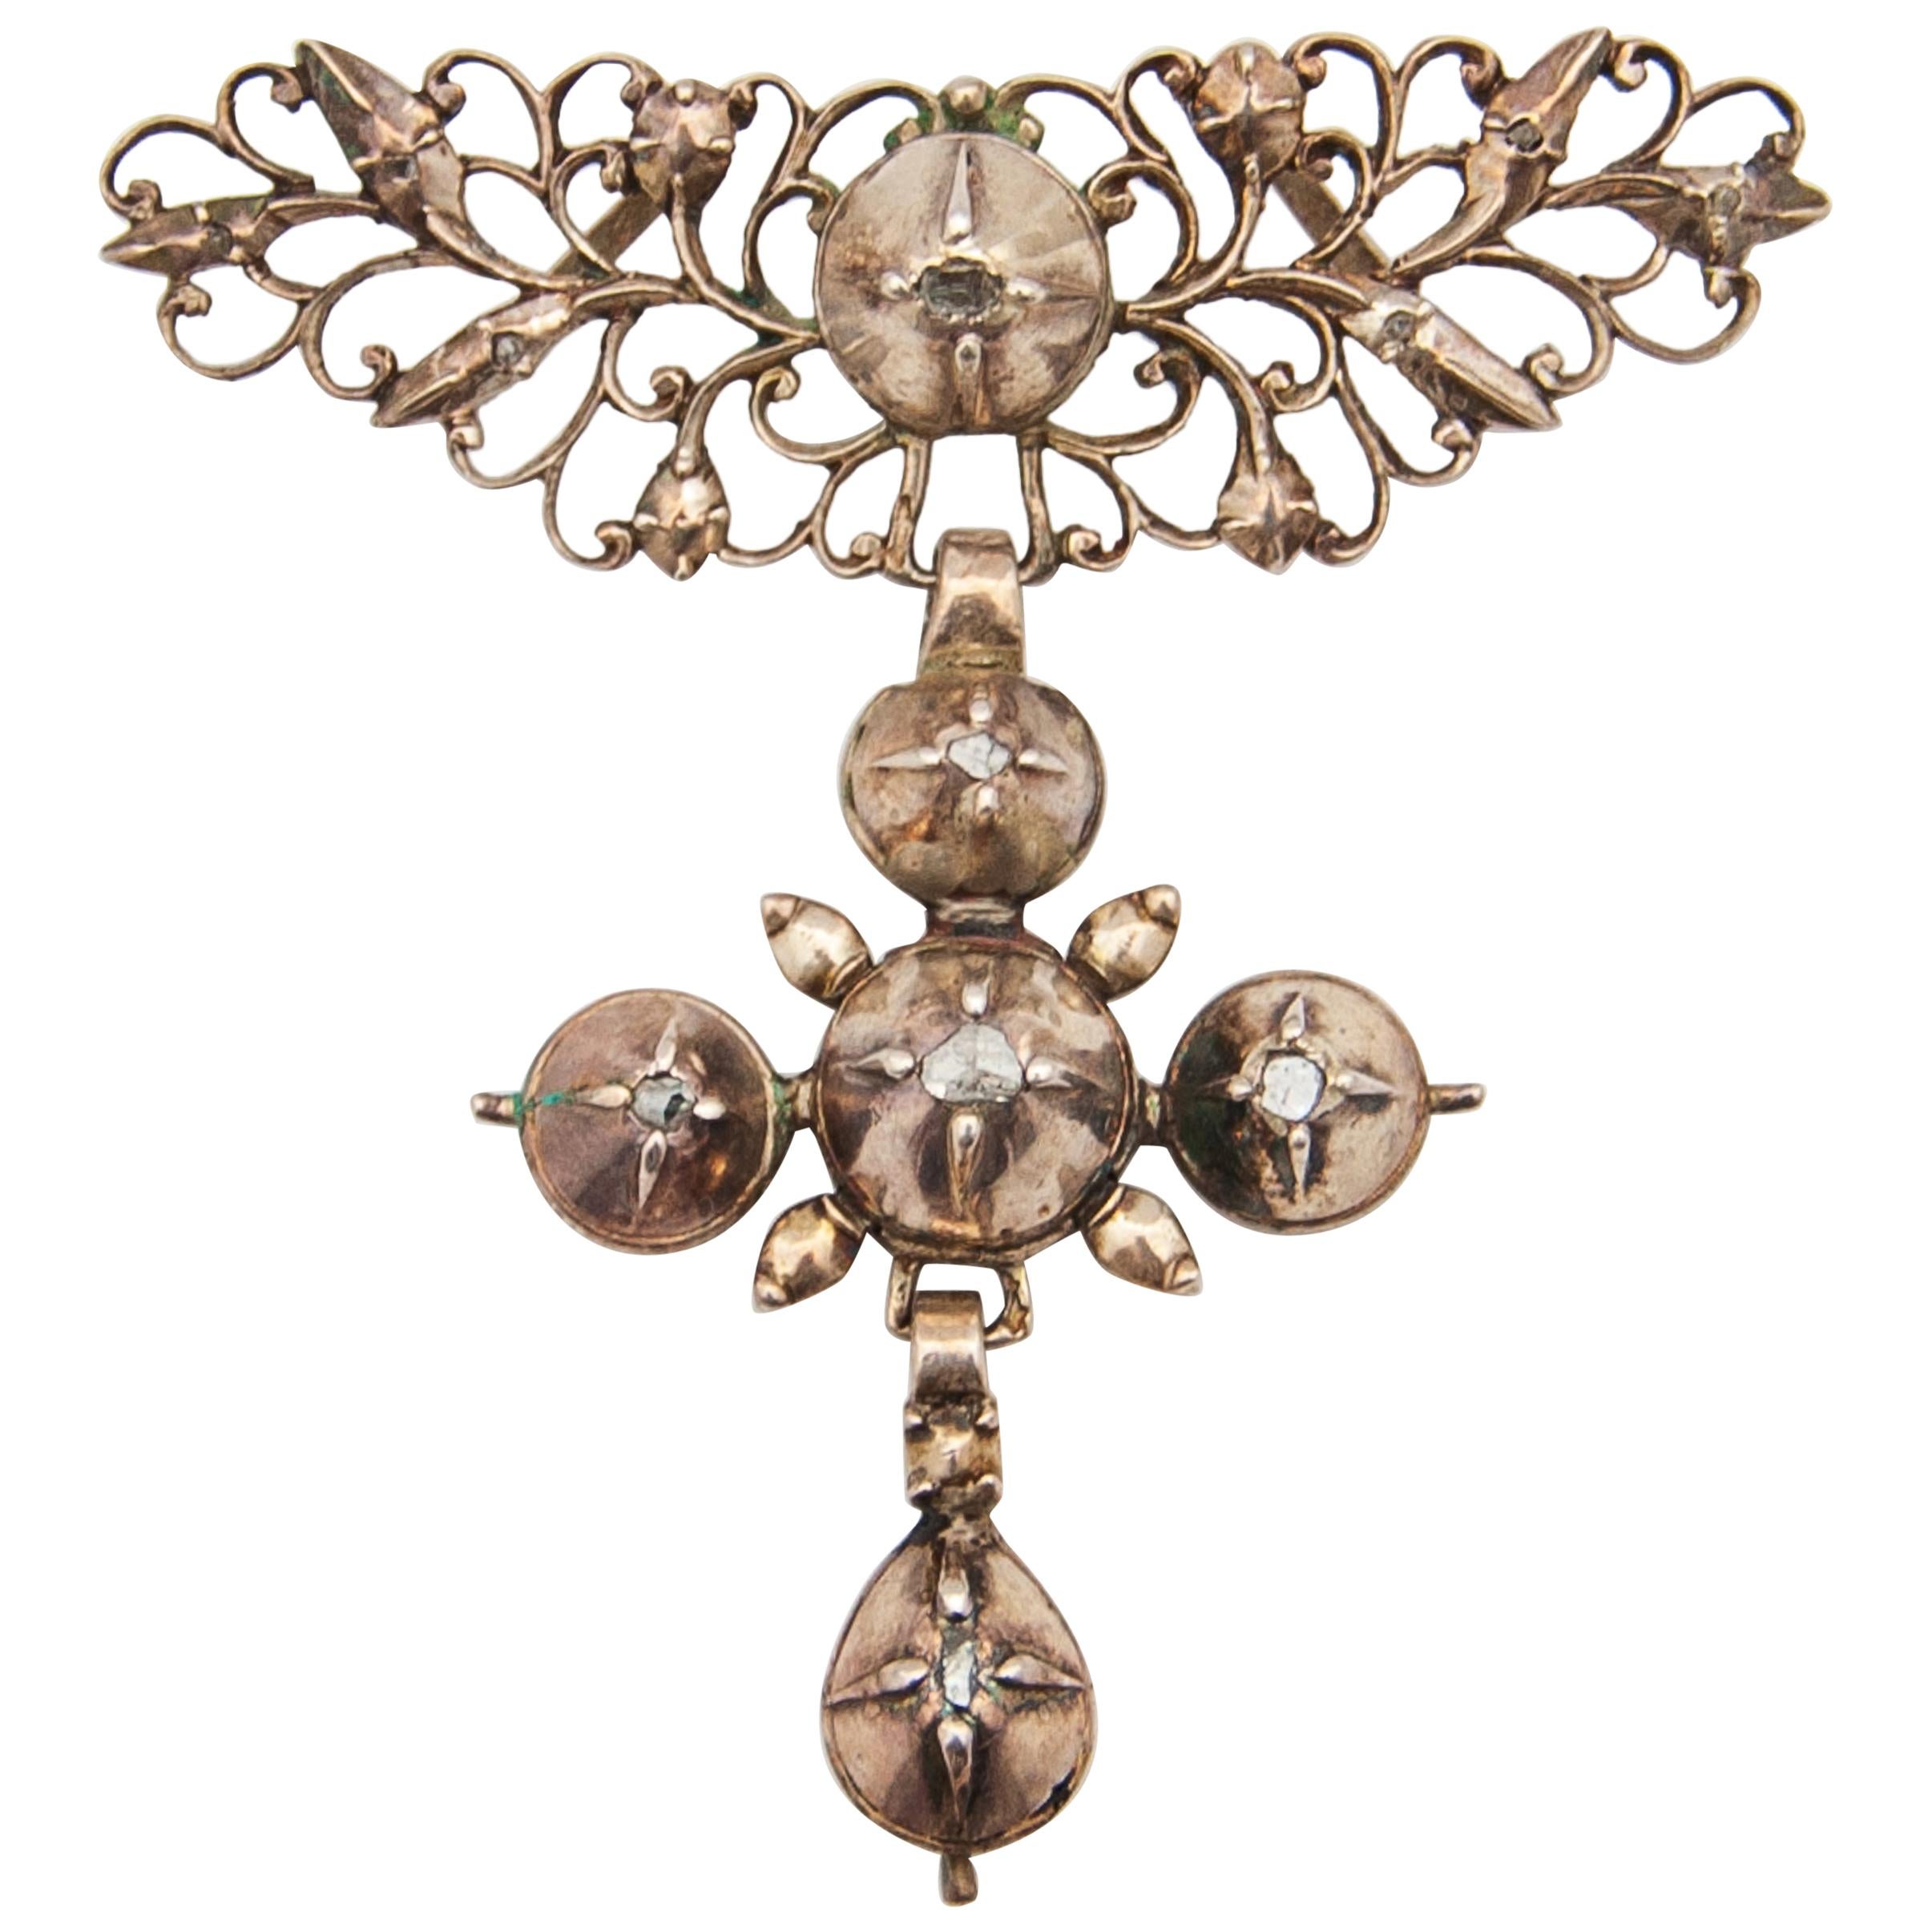 Early 19th Century Diamond Silver Rose Cut Cross Pendant